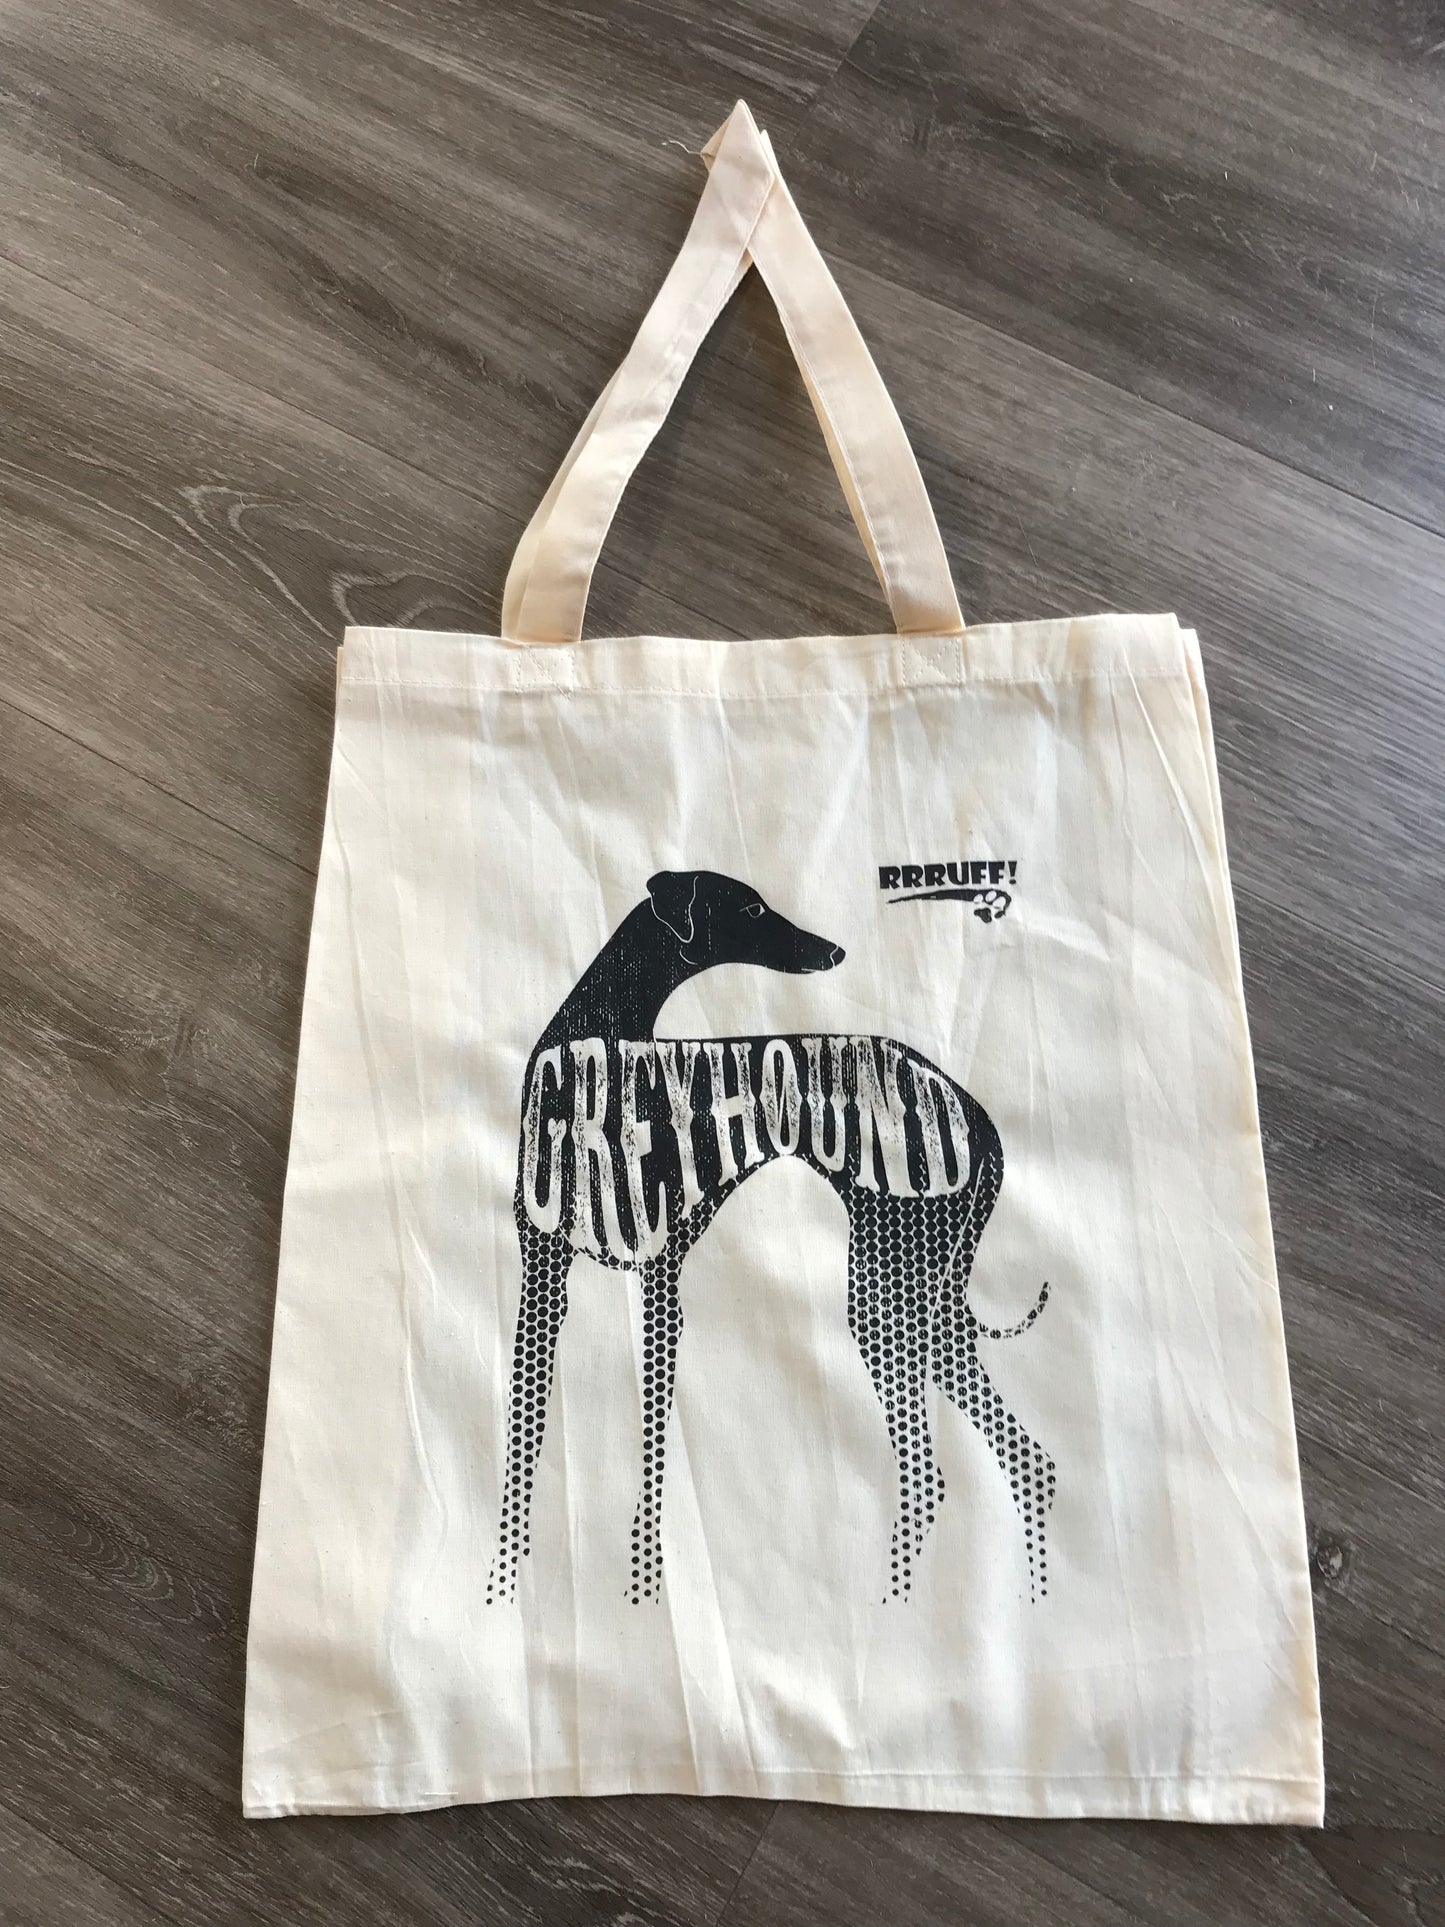 Calico tote bag book bag birthday gift shopping bag greyhound print